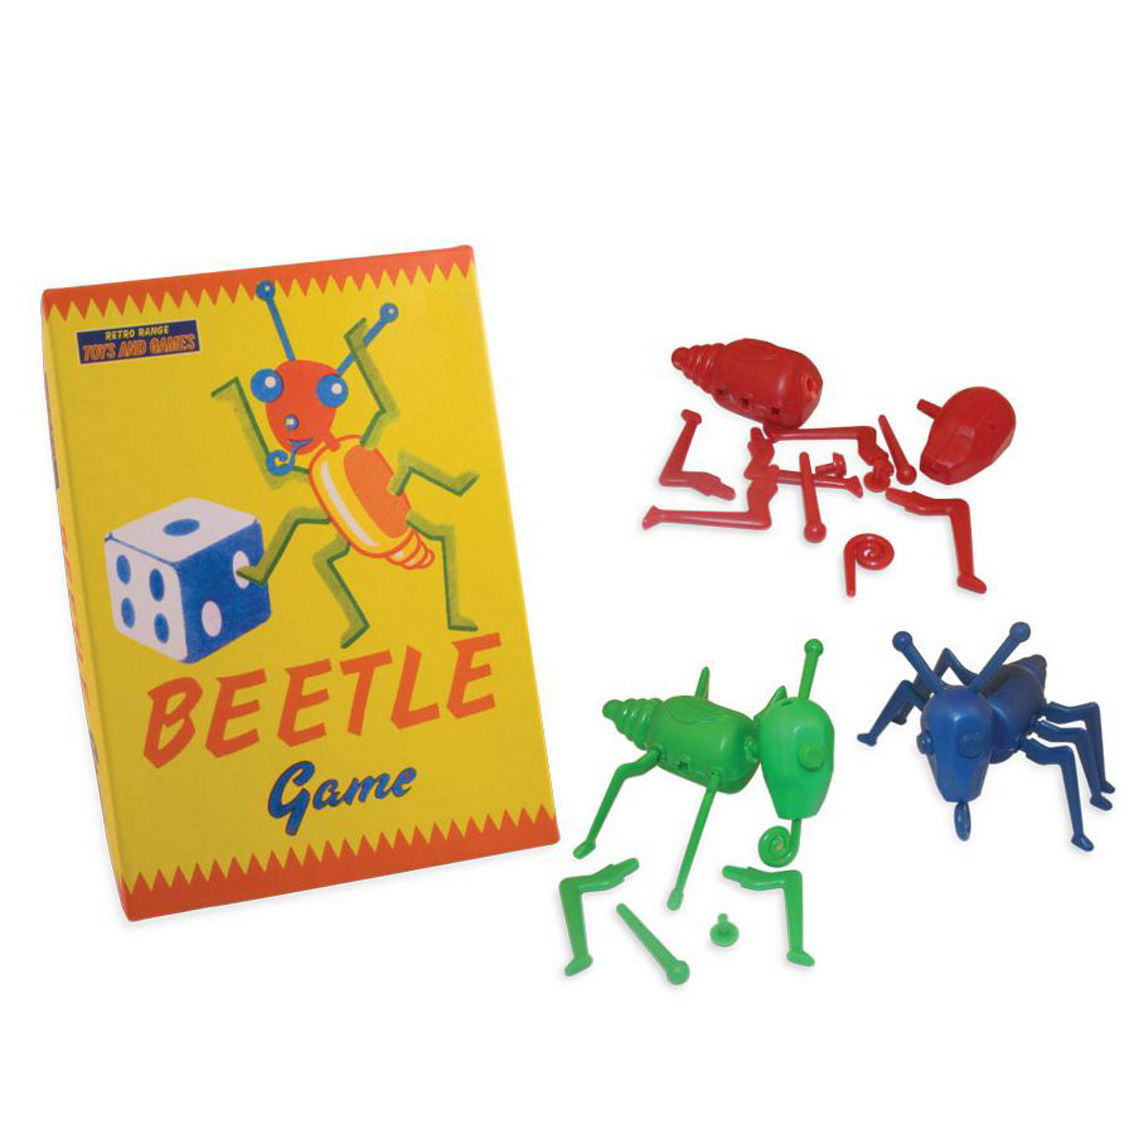 Perisphere & Trylon The Beetle Game - Image 2 of 2